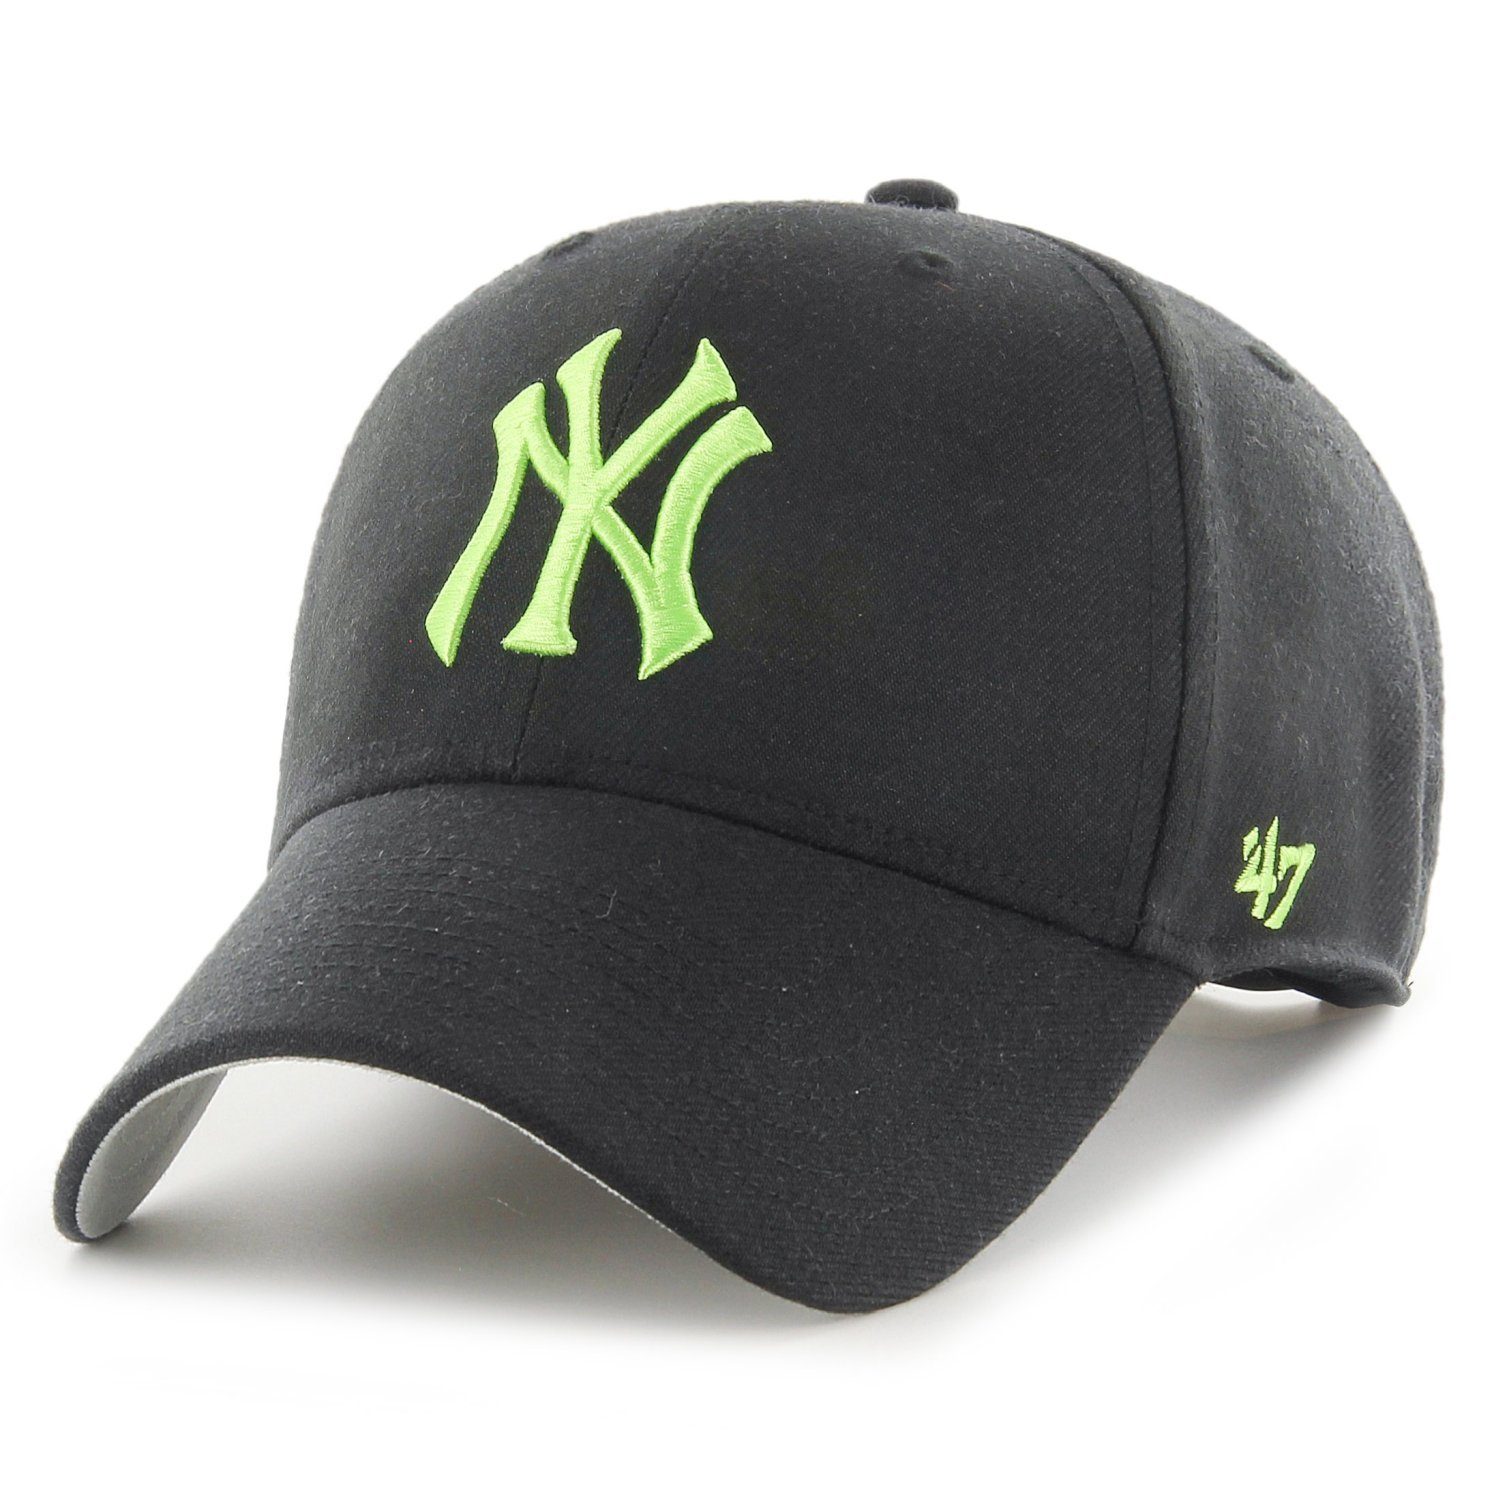 '47 Brand Snapback Cap MLB New York Yankees lime